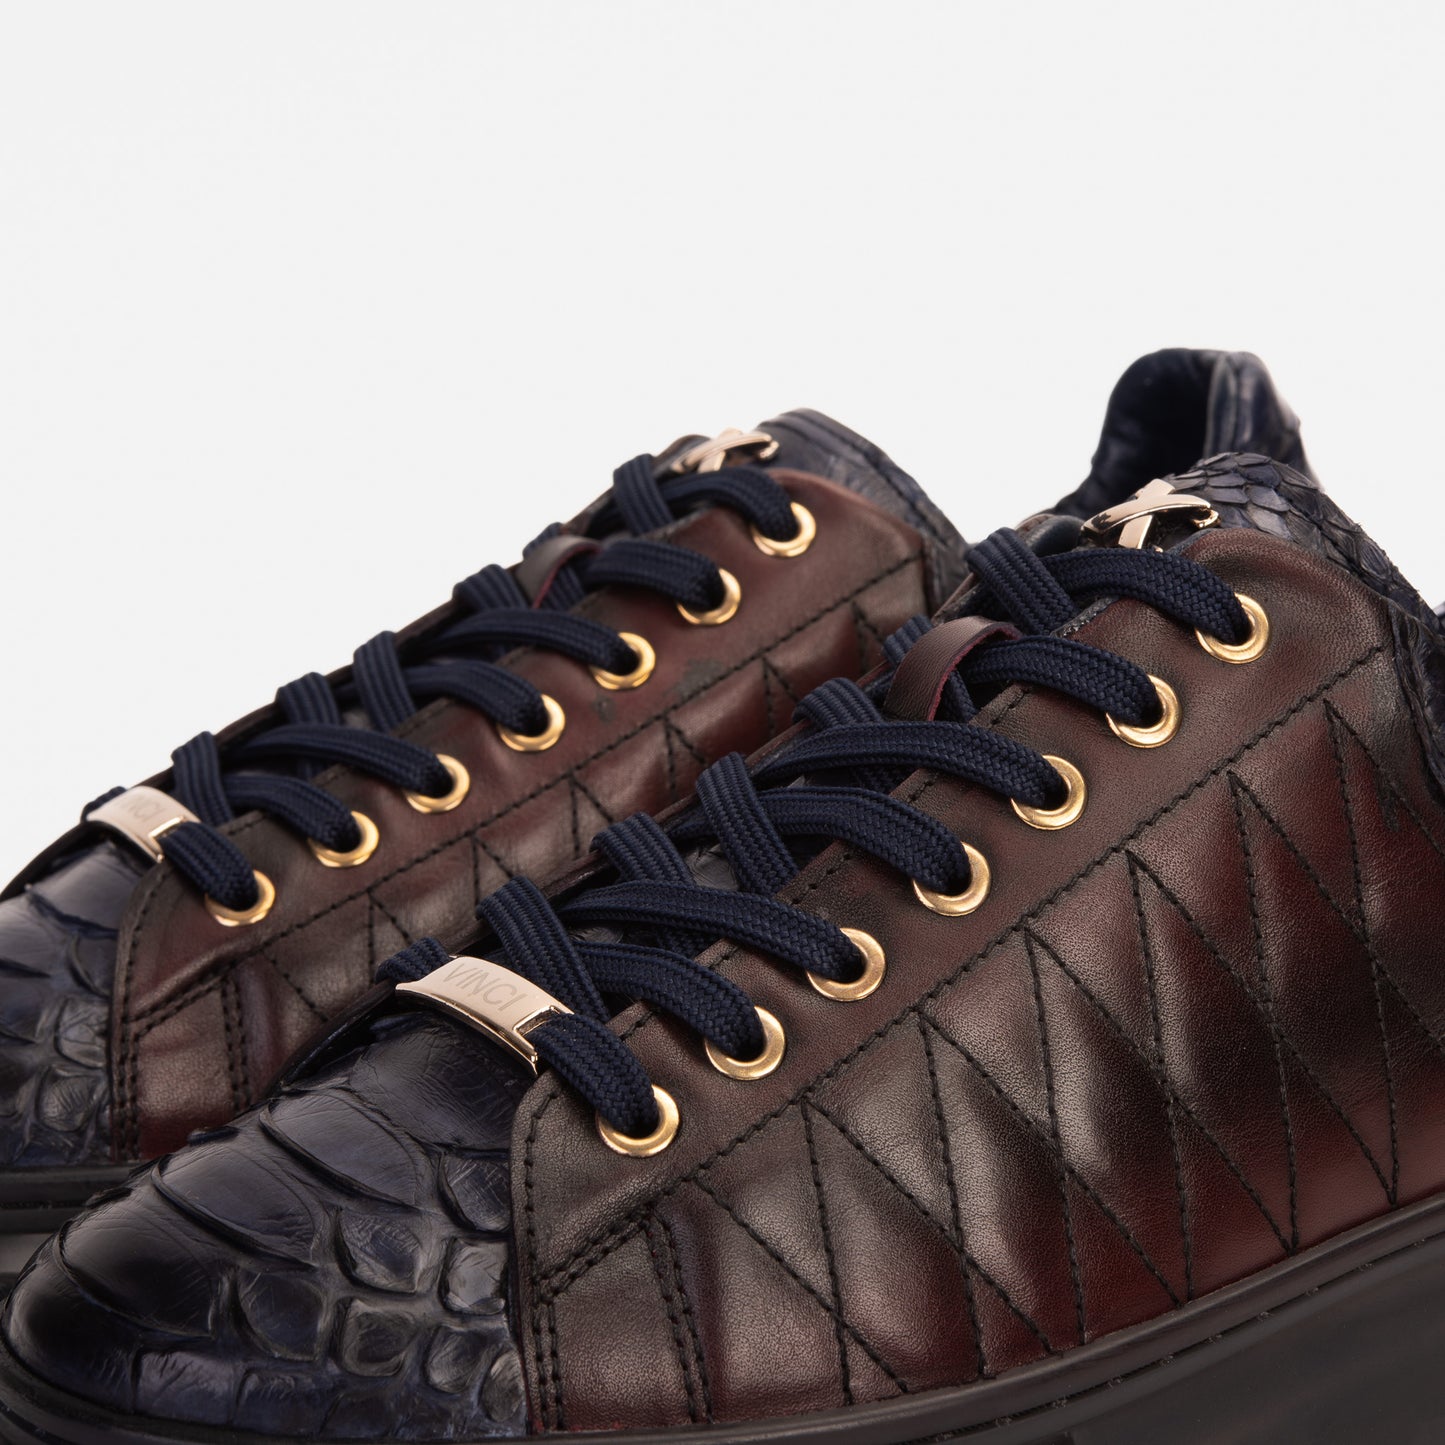 The Adler Navy Blue & Burgundy Snk Leather Men Sneaker Limited Edition